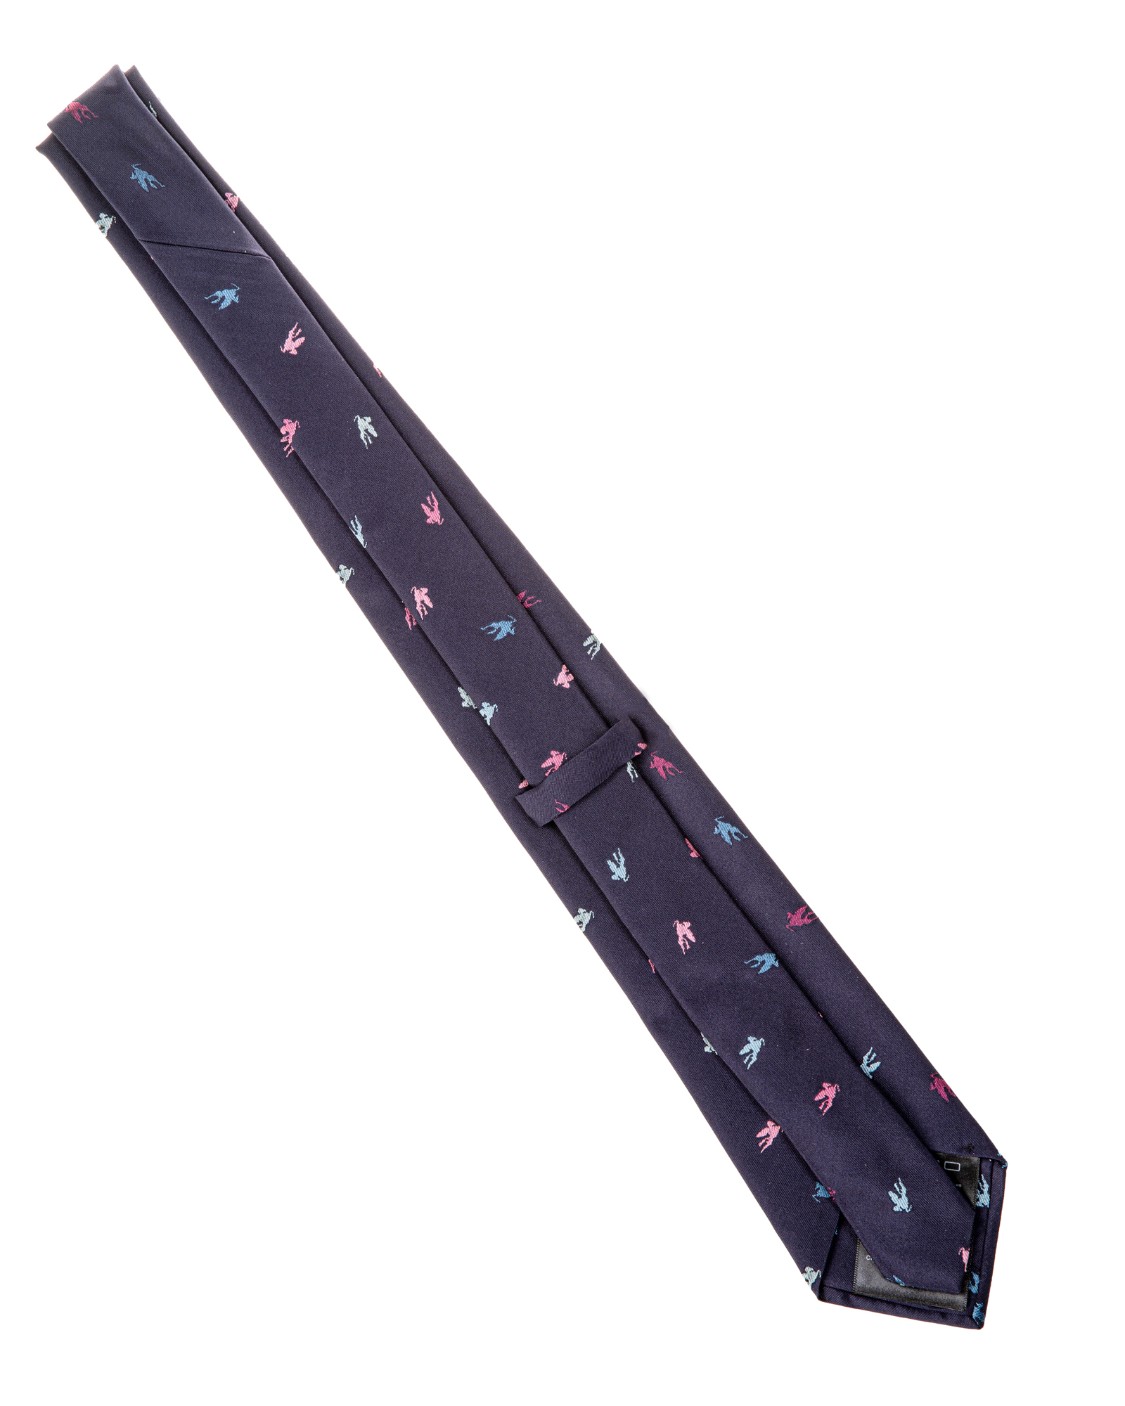 shop ETRO  Cravatta: Etro cravatta in seta jacquard con Pegaso.
Larghezza 8cm.
Made in Italy.
Composizione: 100% seta.. 12026 3041-0200 number 7800265